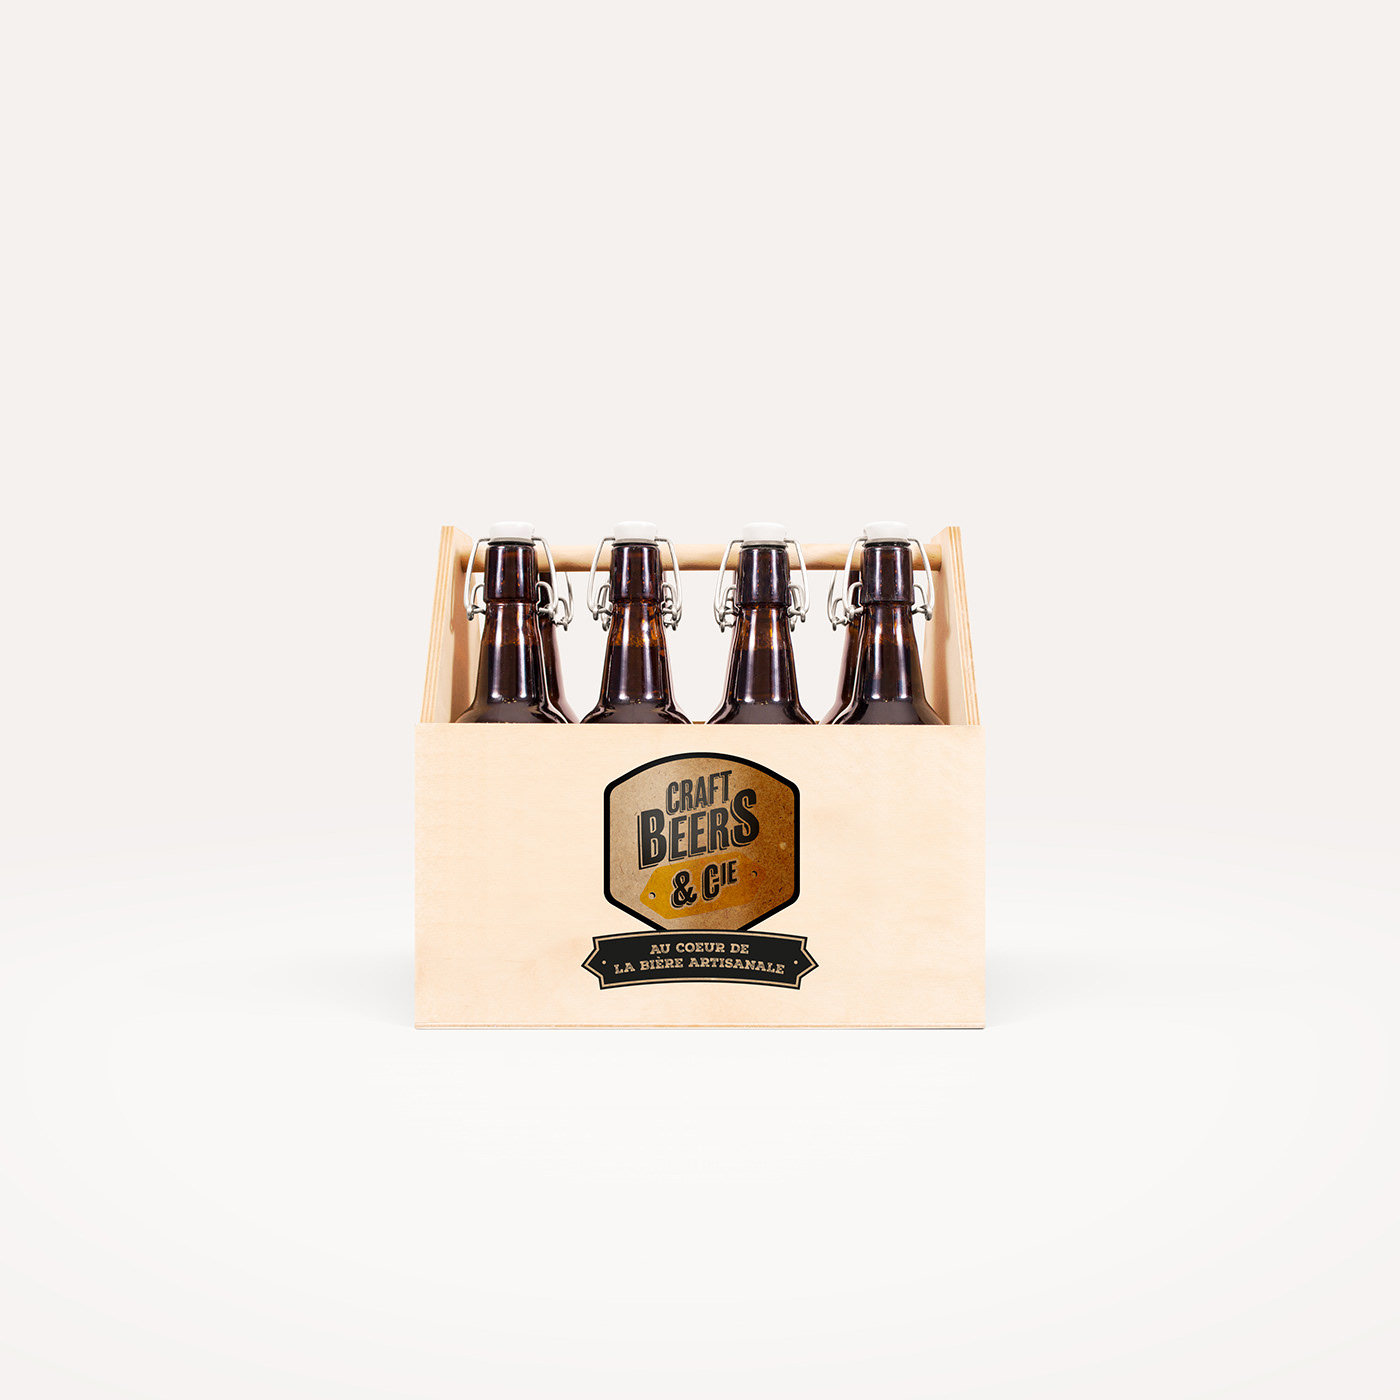 adobe illustrator beer brand identity brewery brewing craft beer Label label design